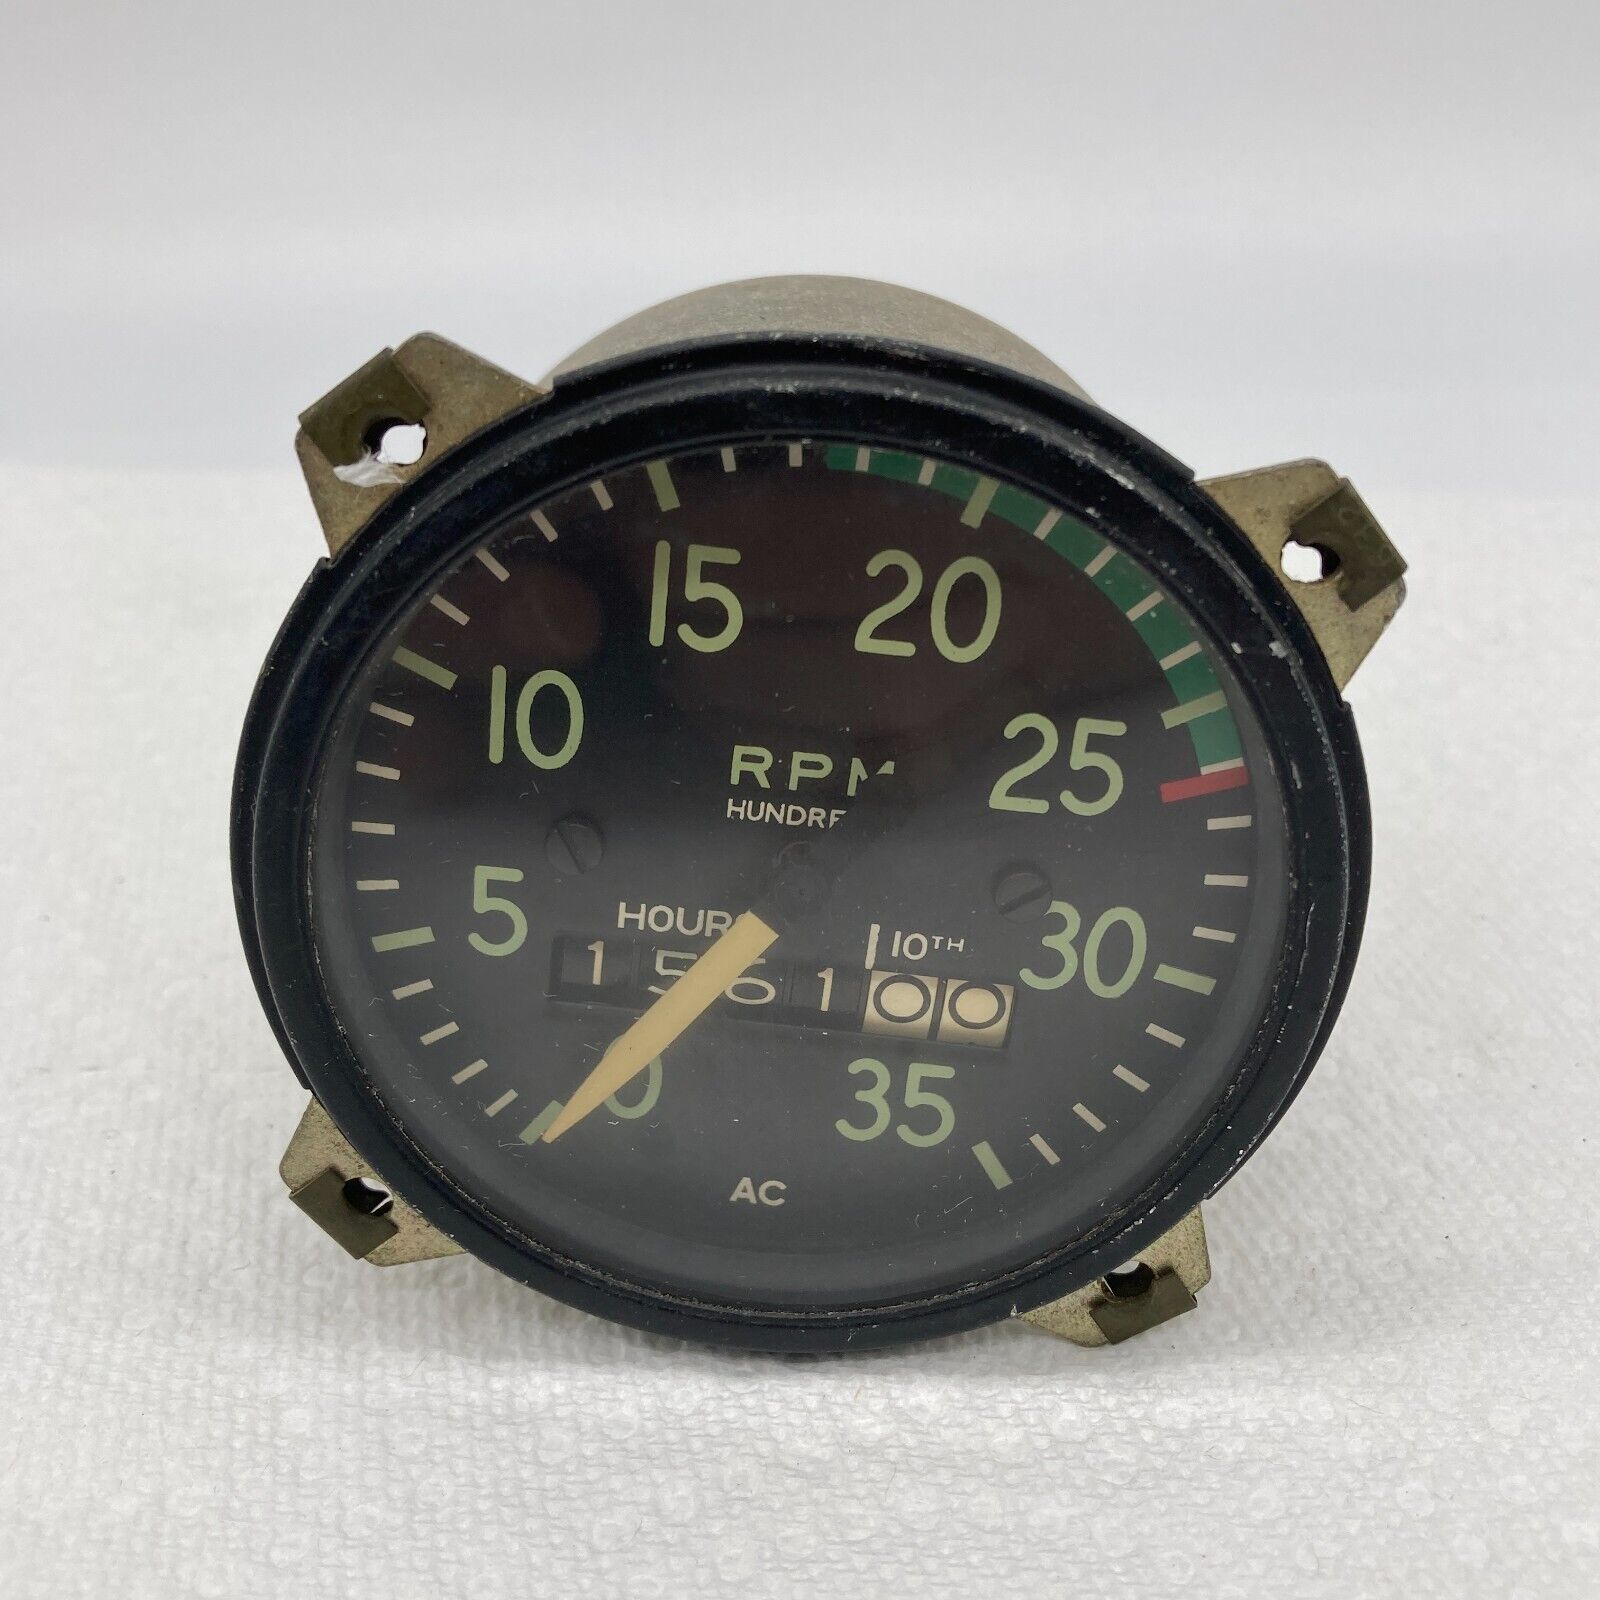 Used AC div GMC vintage Aircraft Tachometer 1561.00  hrs. GAUGE STEAMPUNK